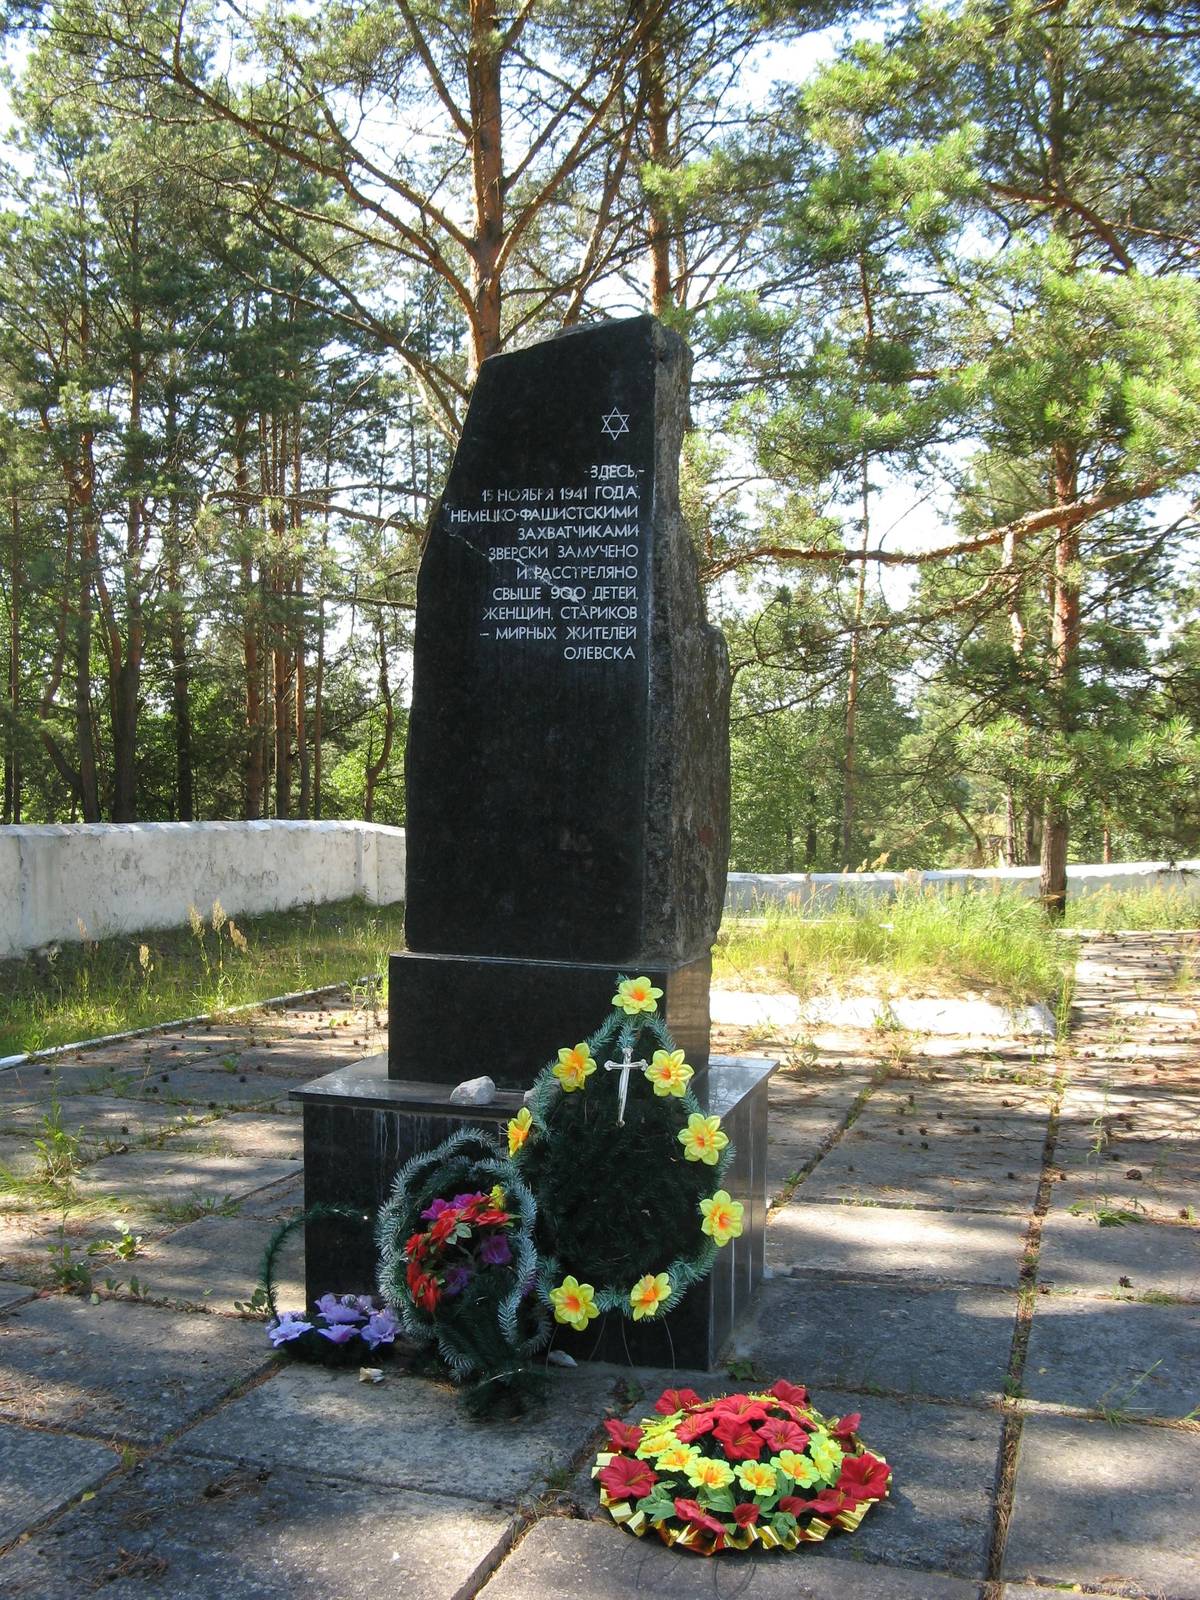  A monument in Varvarivka, Ukraine. (Photo courtesy the author)